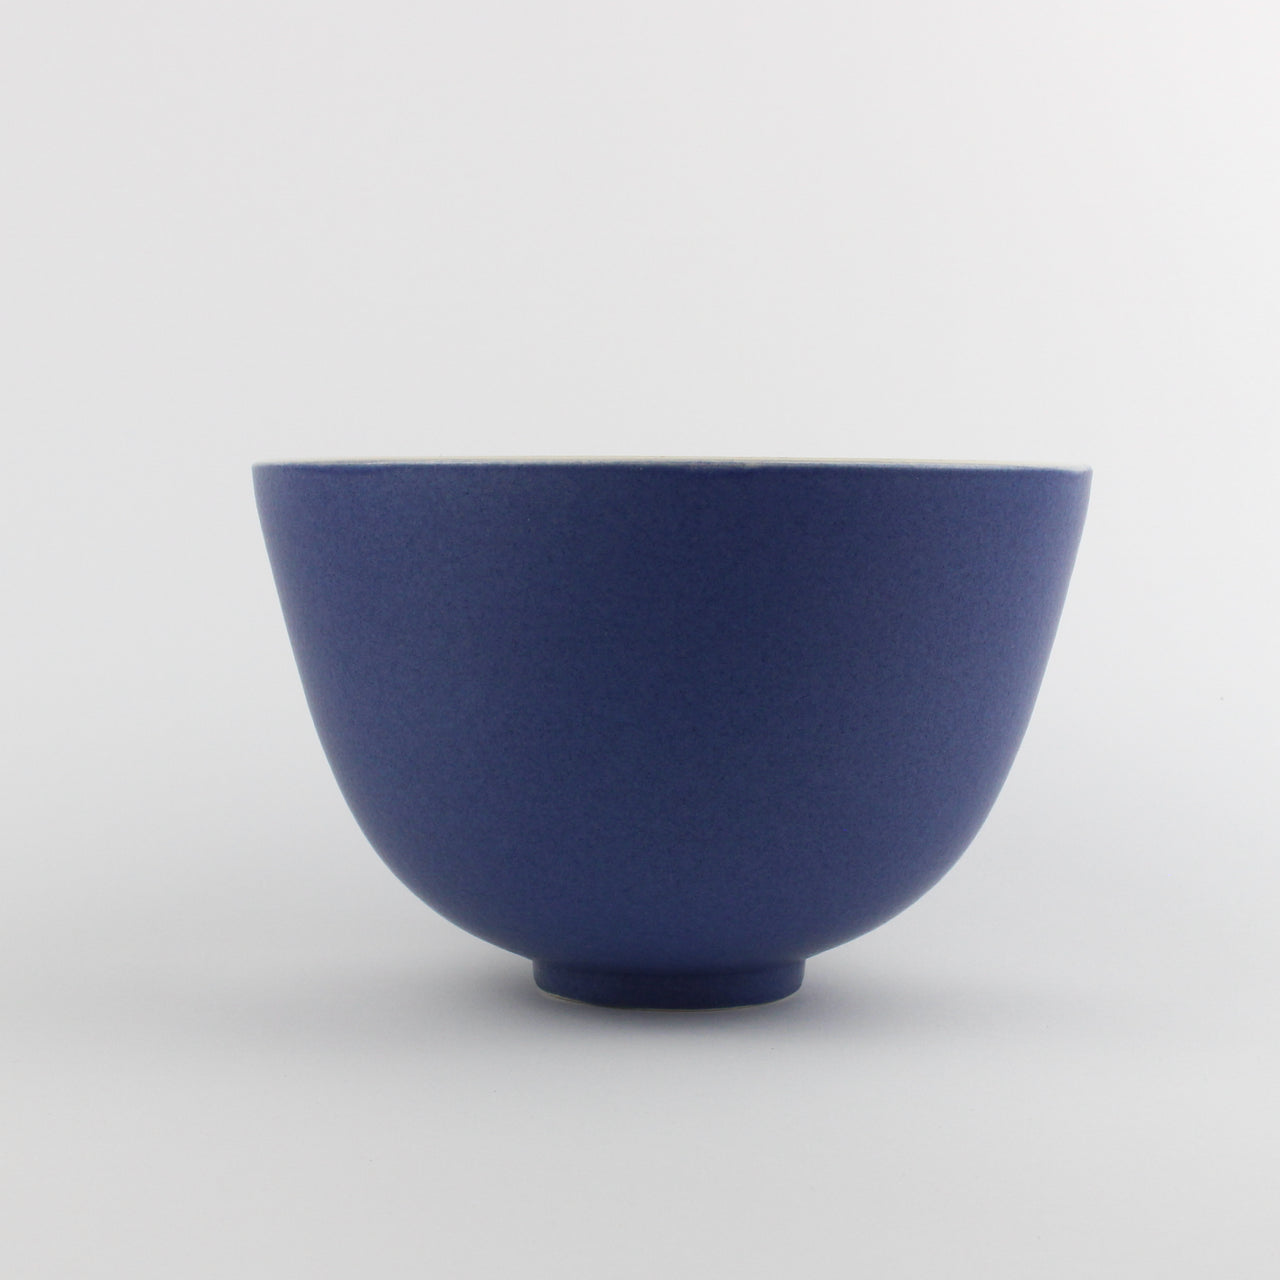 Lucy Burley - Cornflower Blue bowl